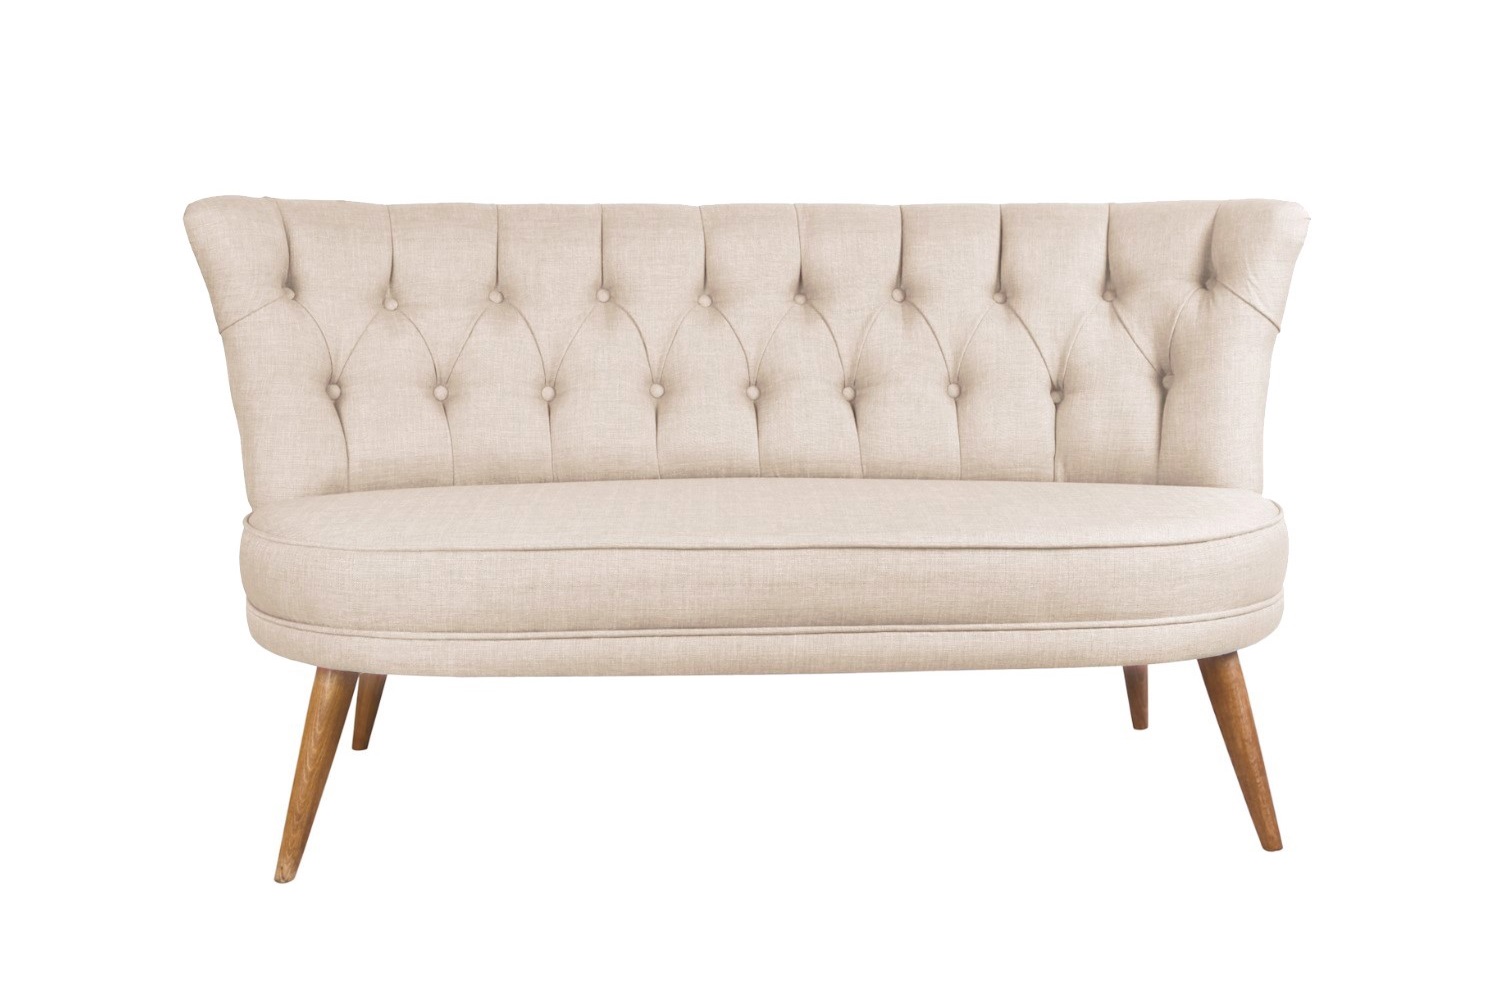 Design kanapé Taneisha 140 cm krémszínű